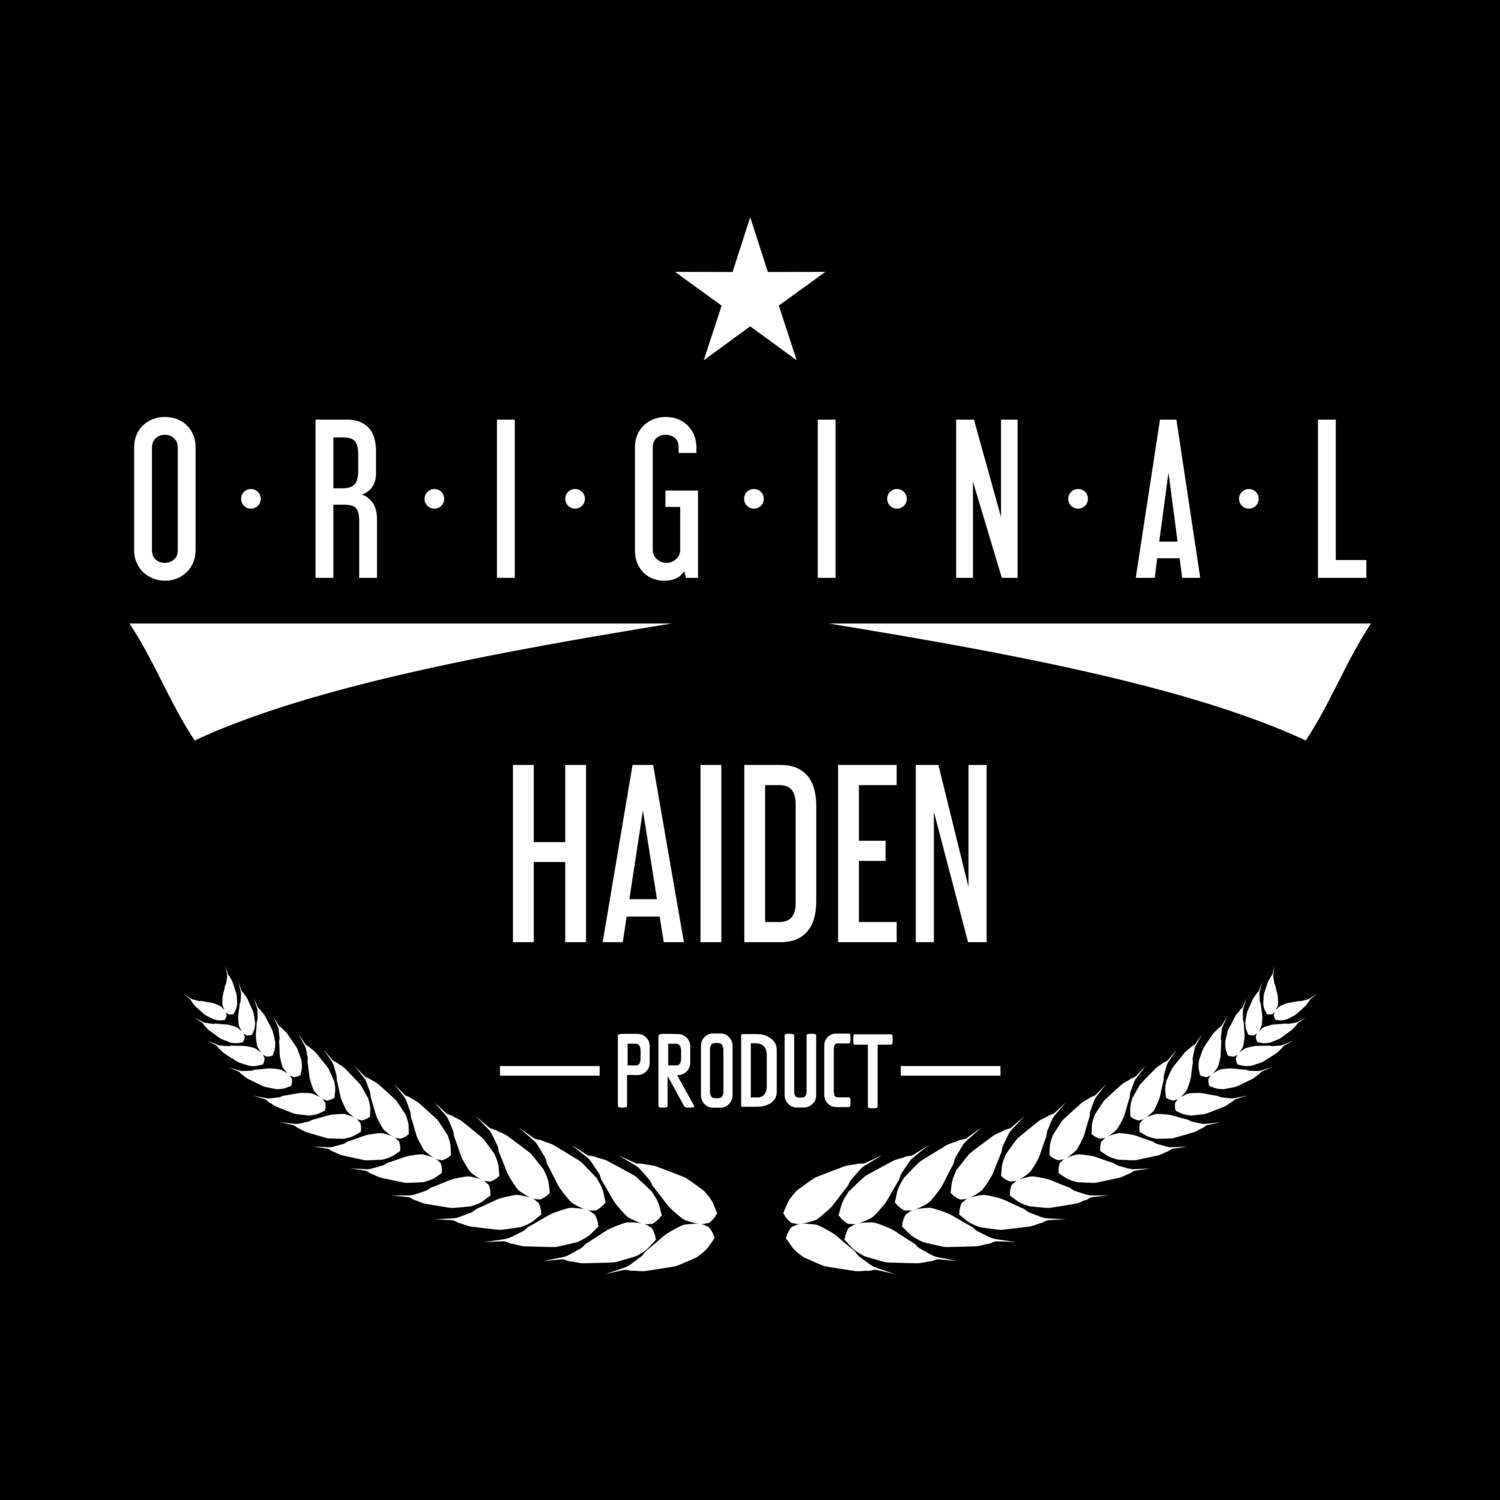 Haiden T-Shirt »Original Product«